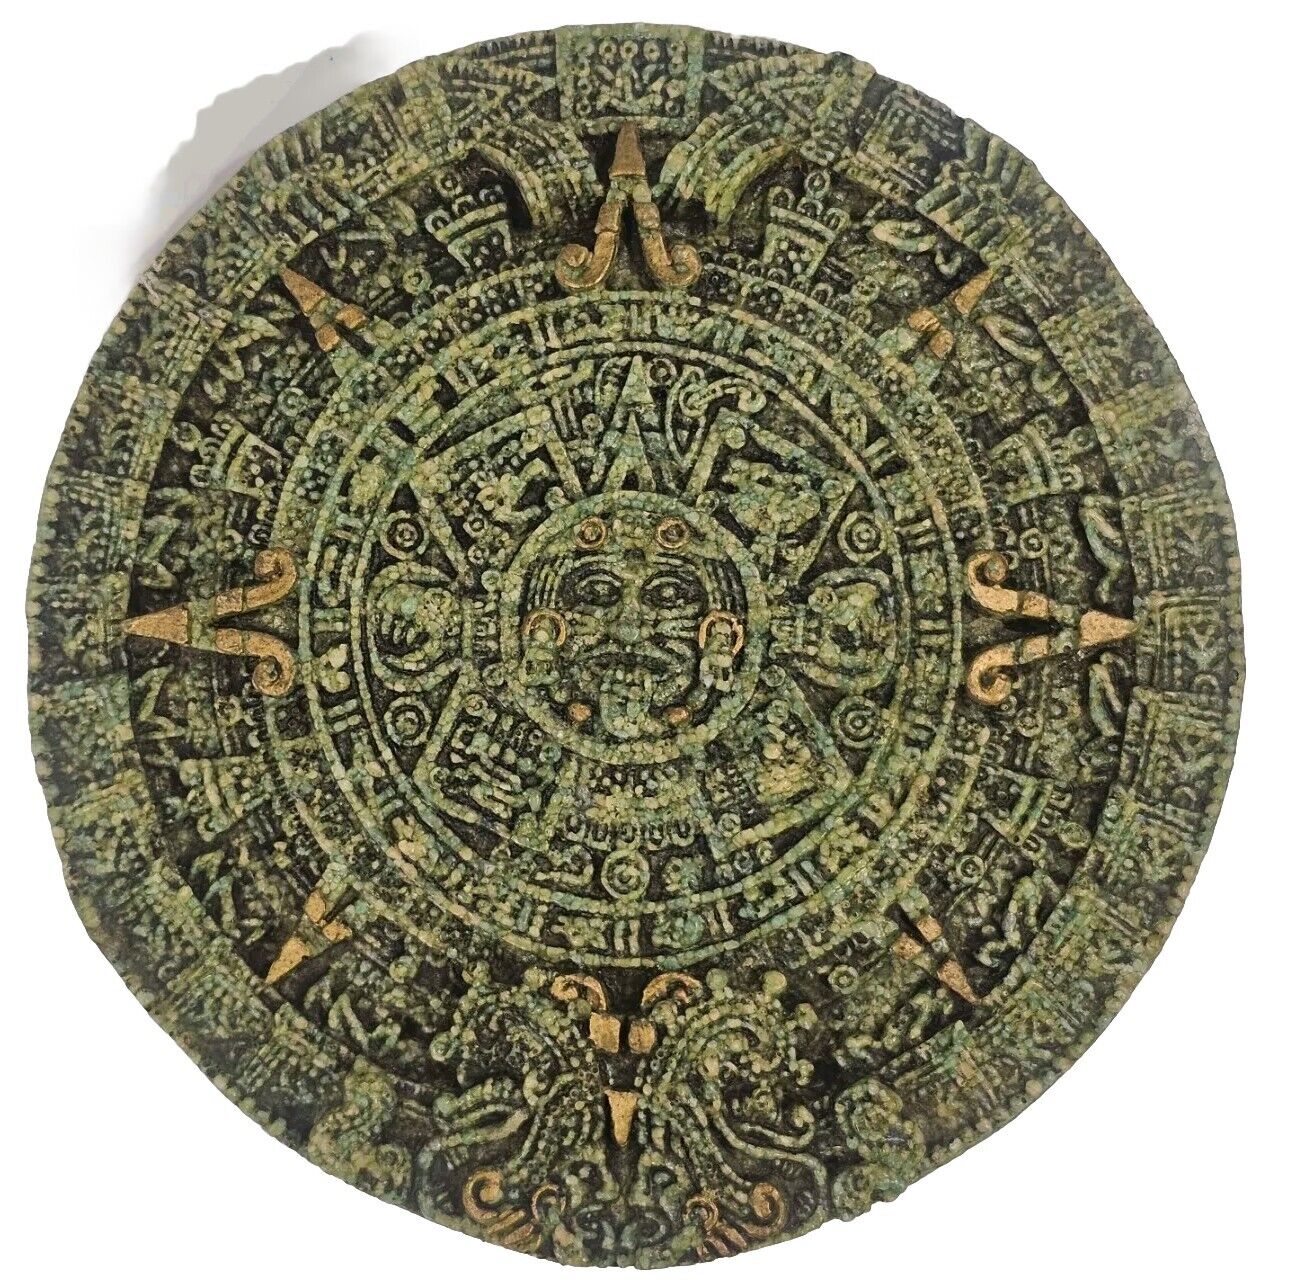 VTG Aztec Mayan Calendar Green Crush Malachite Stone Wall Hanging Decor Mexico